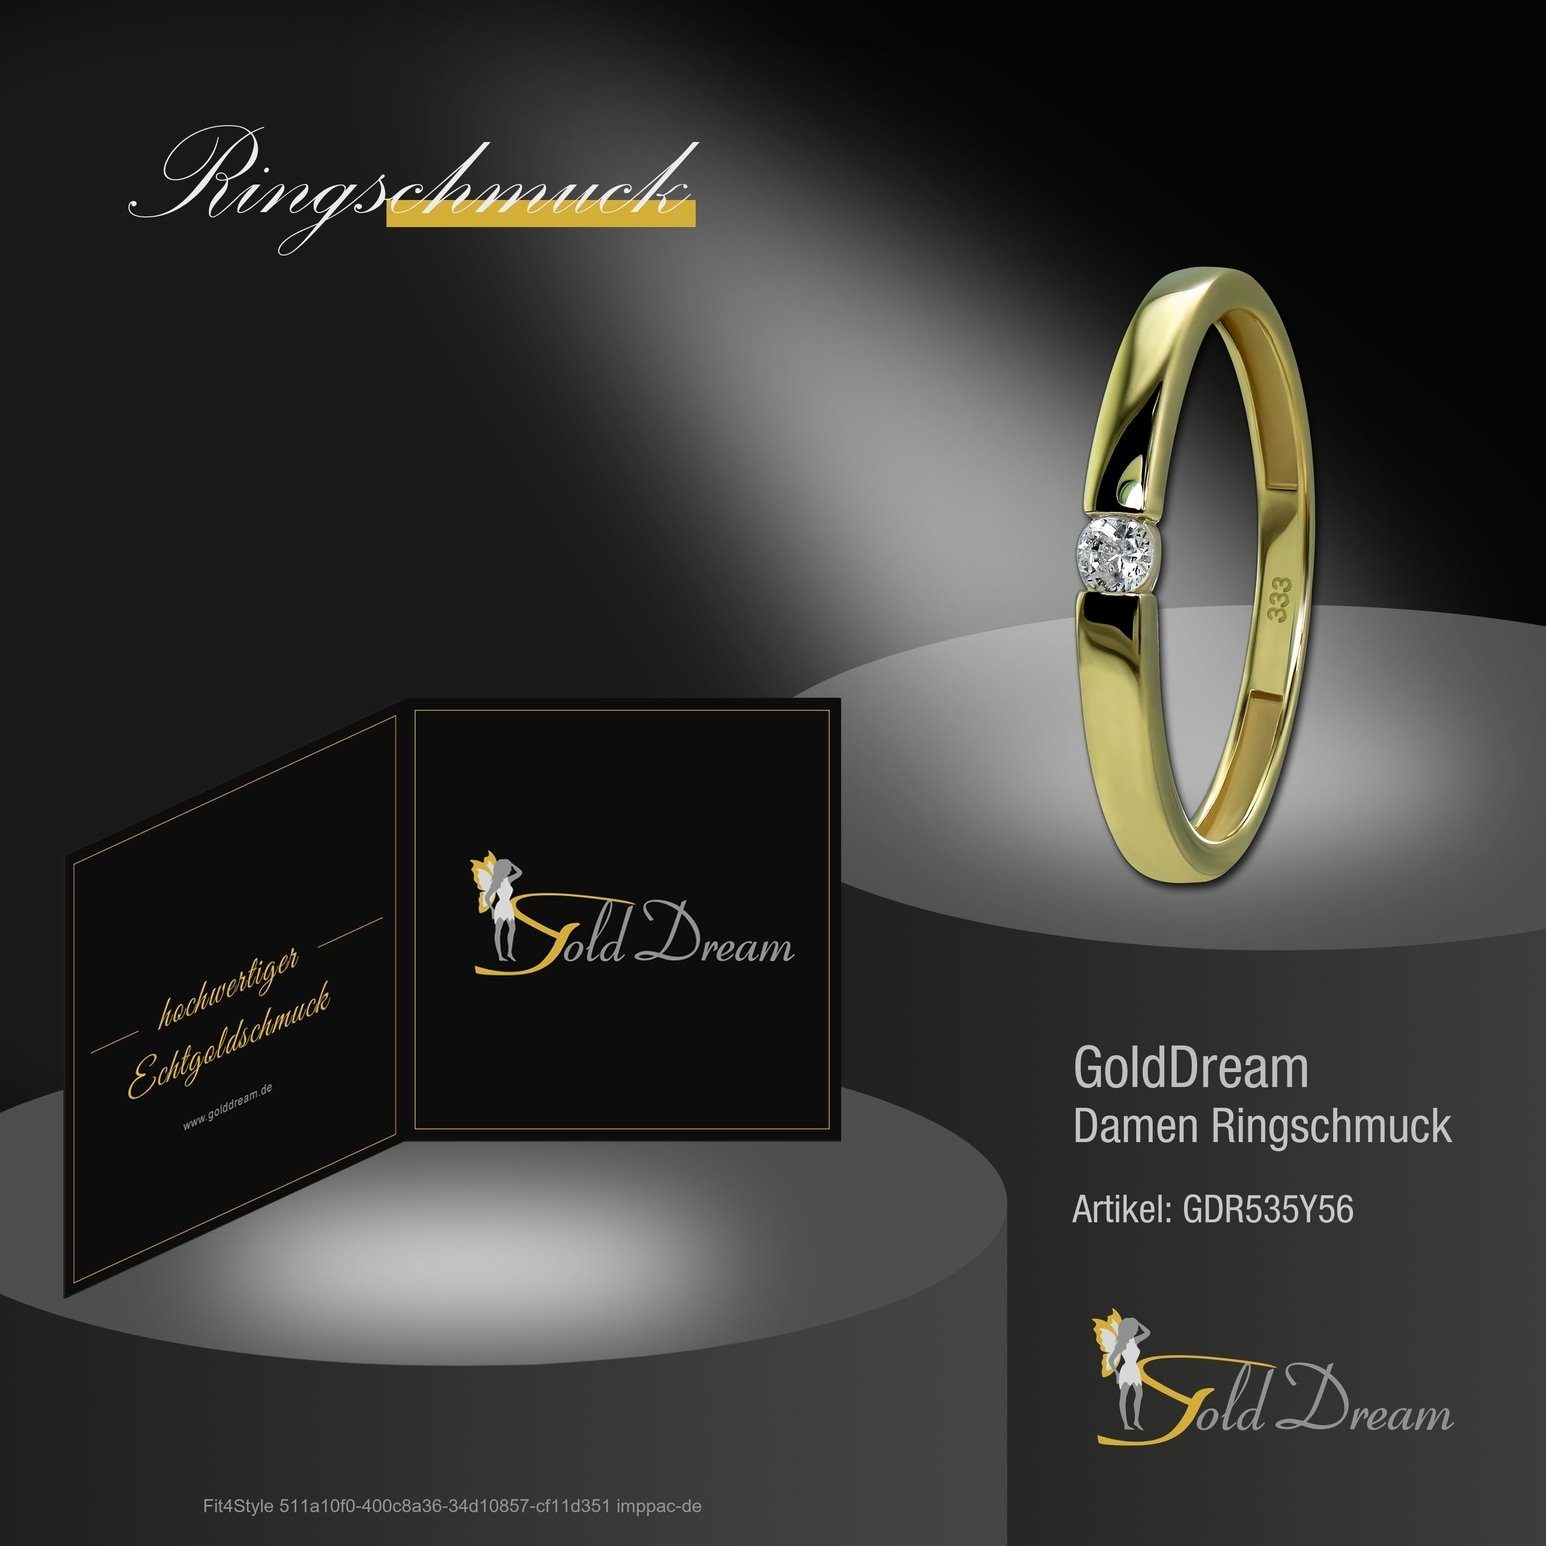 GoldDream Goldring GoldDream Farbe: 8 333 (Fingerring), Ring weiß Karat, Gr.56 gold, Ring Gelbgold Damen Gold Classic Classic 